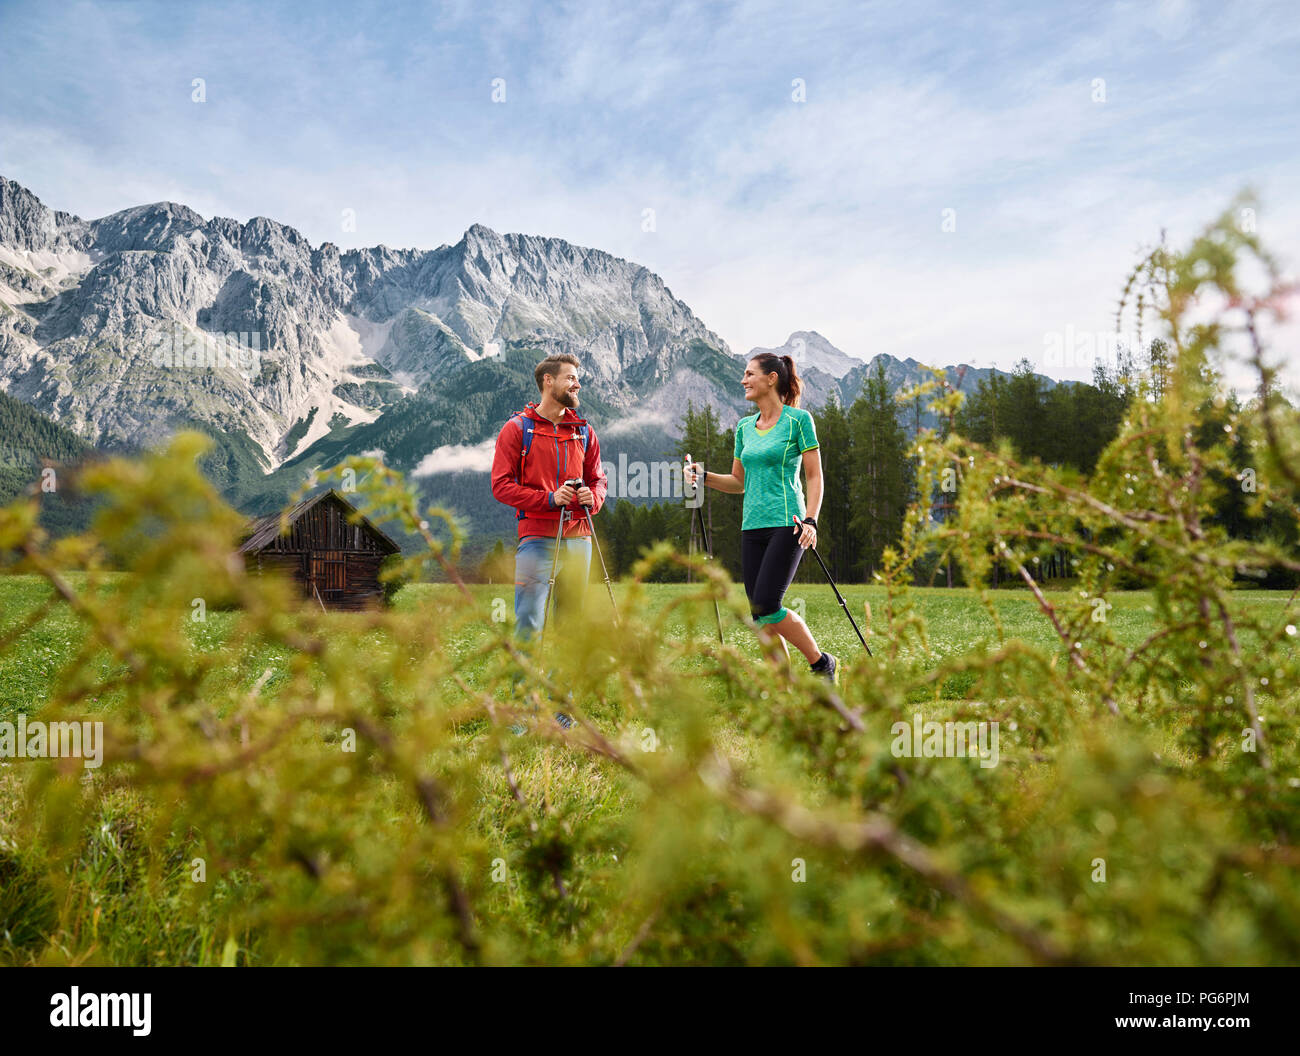 Austria, Tyrol, Mieming, couple hiking in alpine scenery Stock Photo